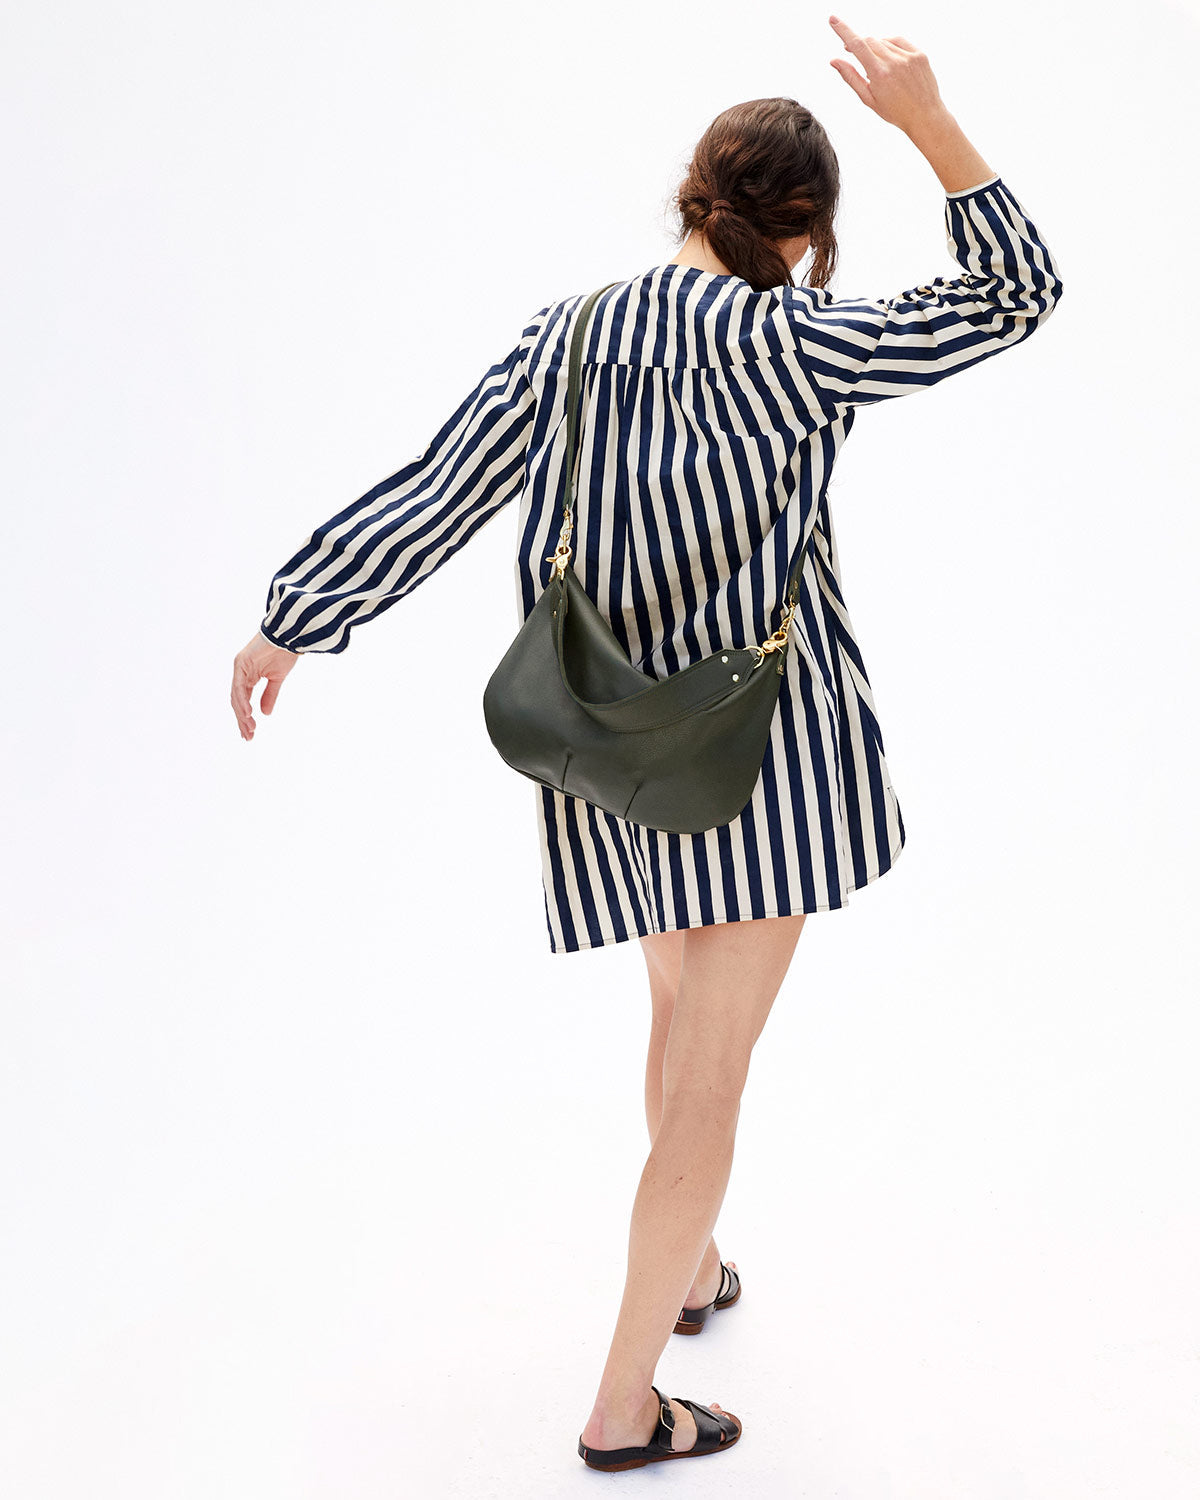 Danica Spinning Around Wearing the Navy & Cream Stripe St. Martin Dress and the Loden Moyen Messengery